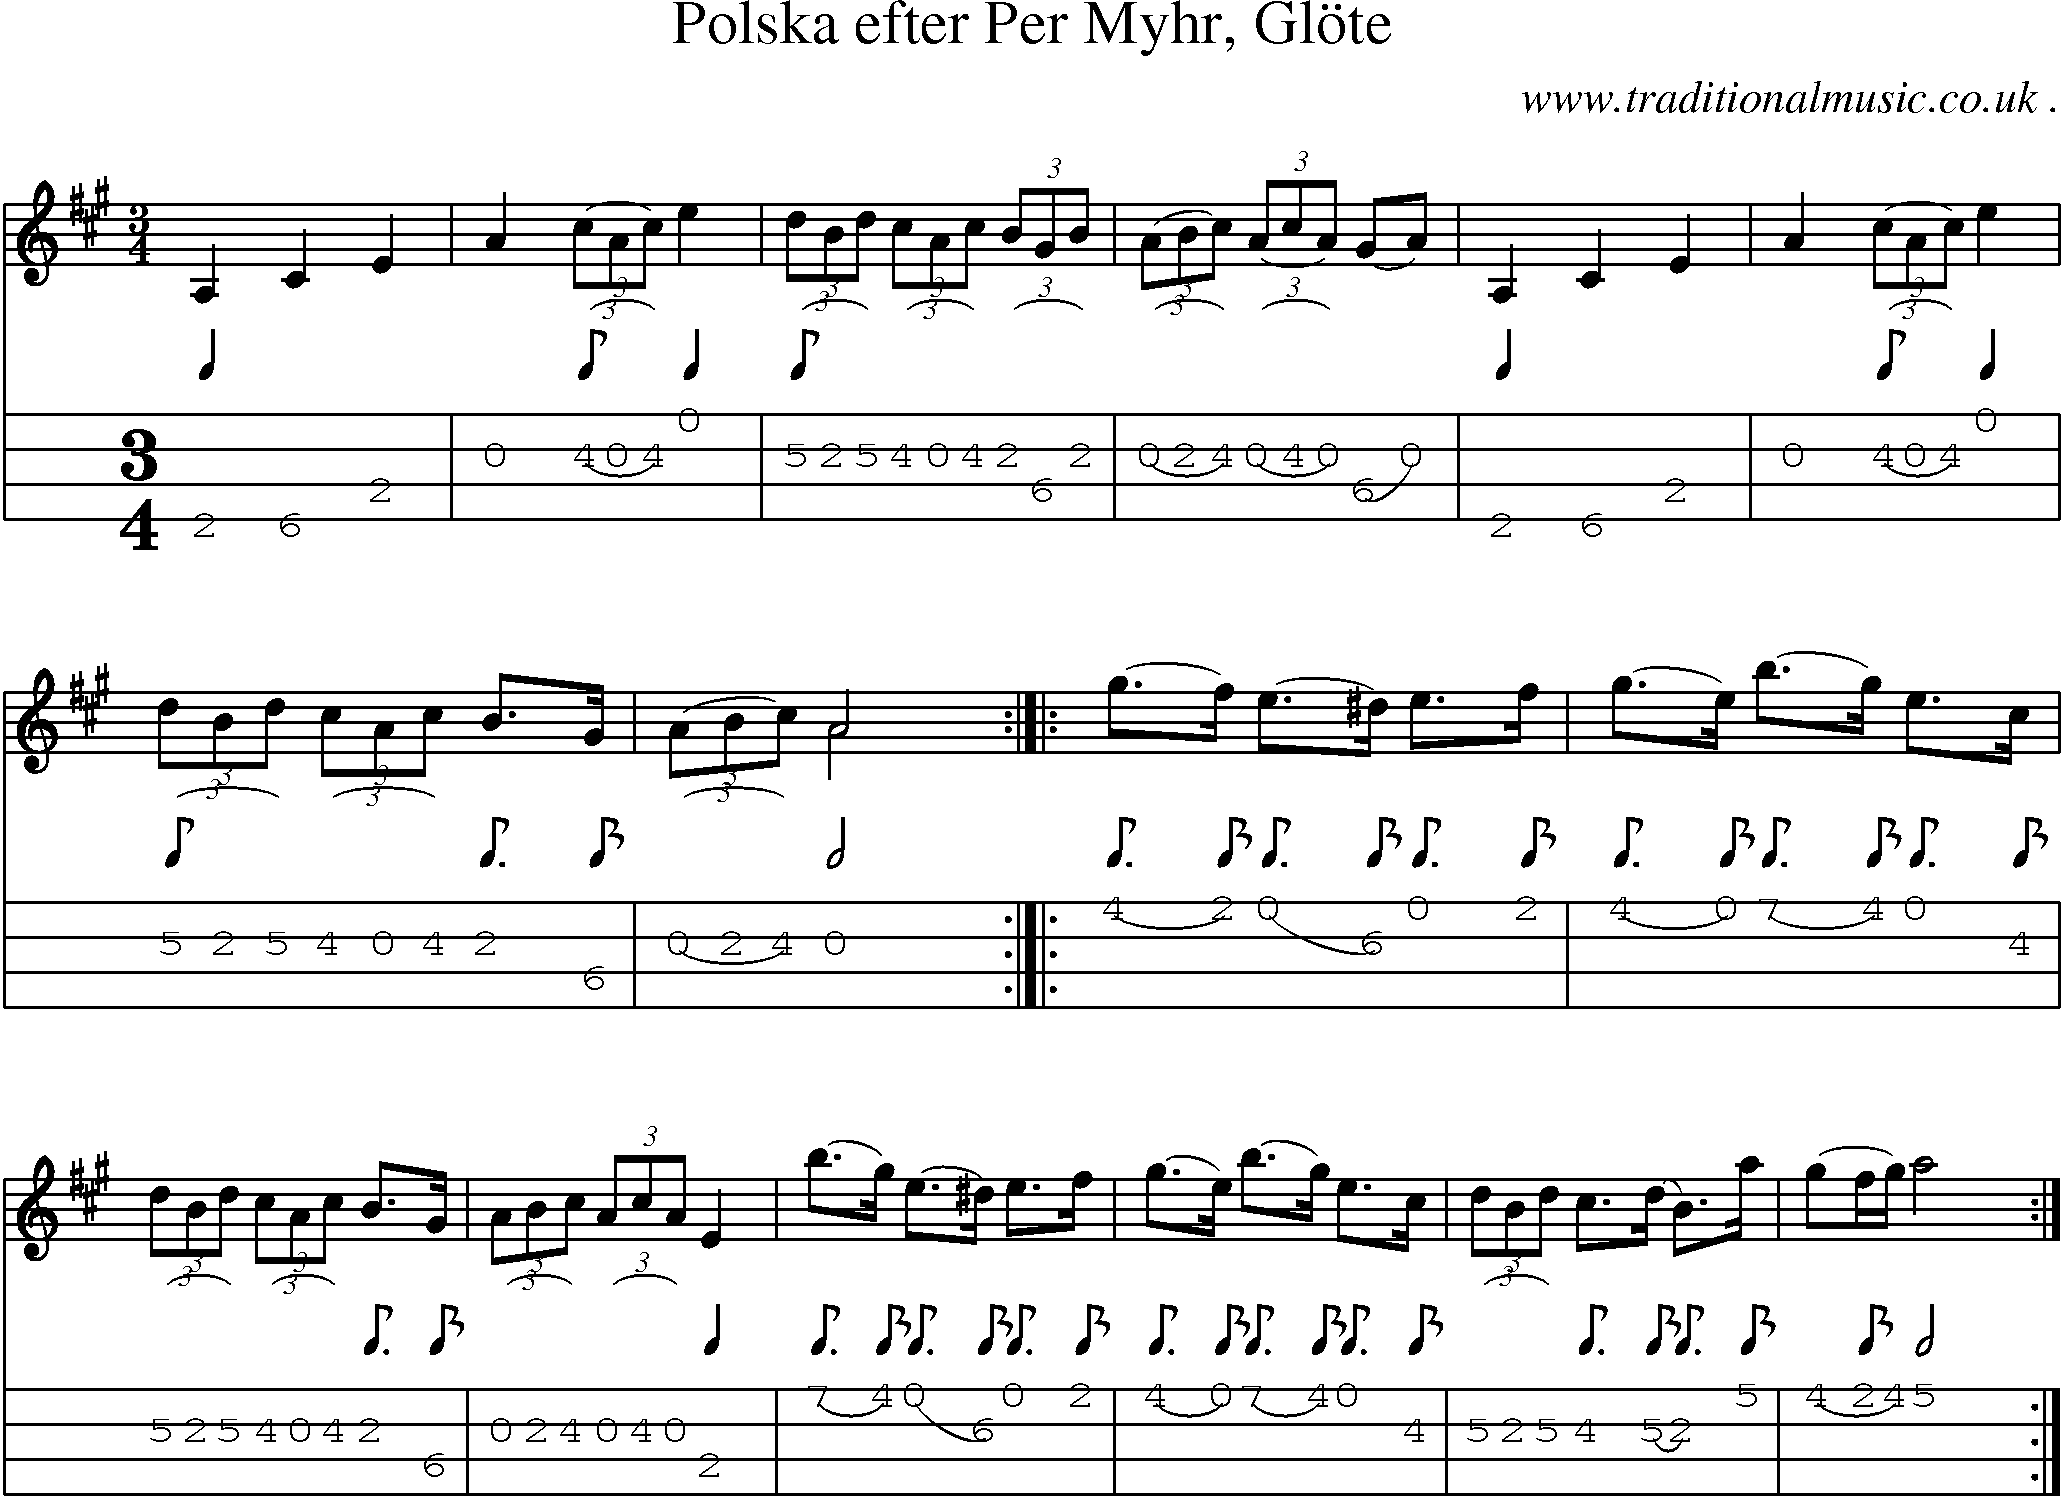 Sheet-Music and Mandolin Tabs for Polska Efter Per Myhr Glote